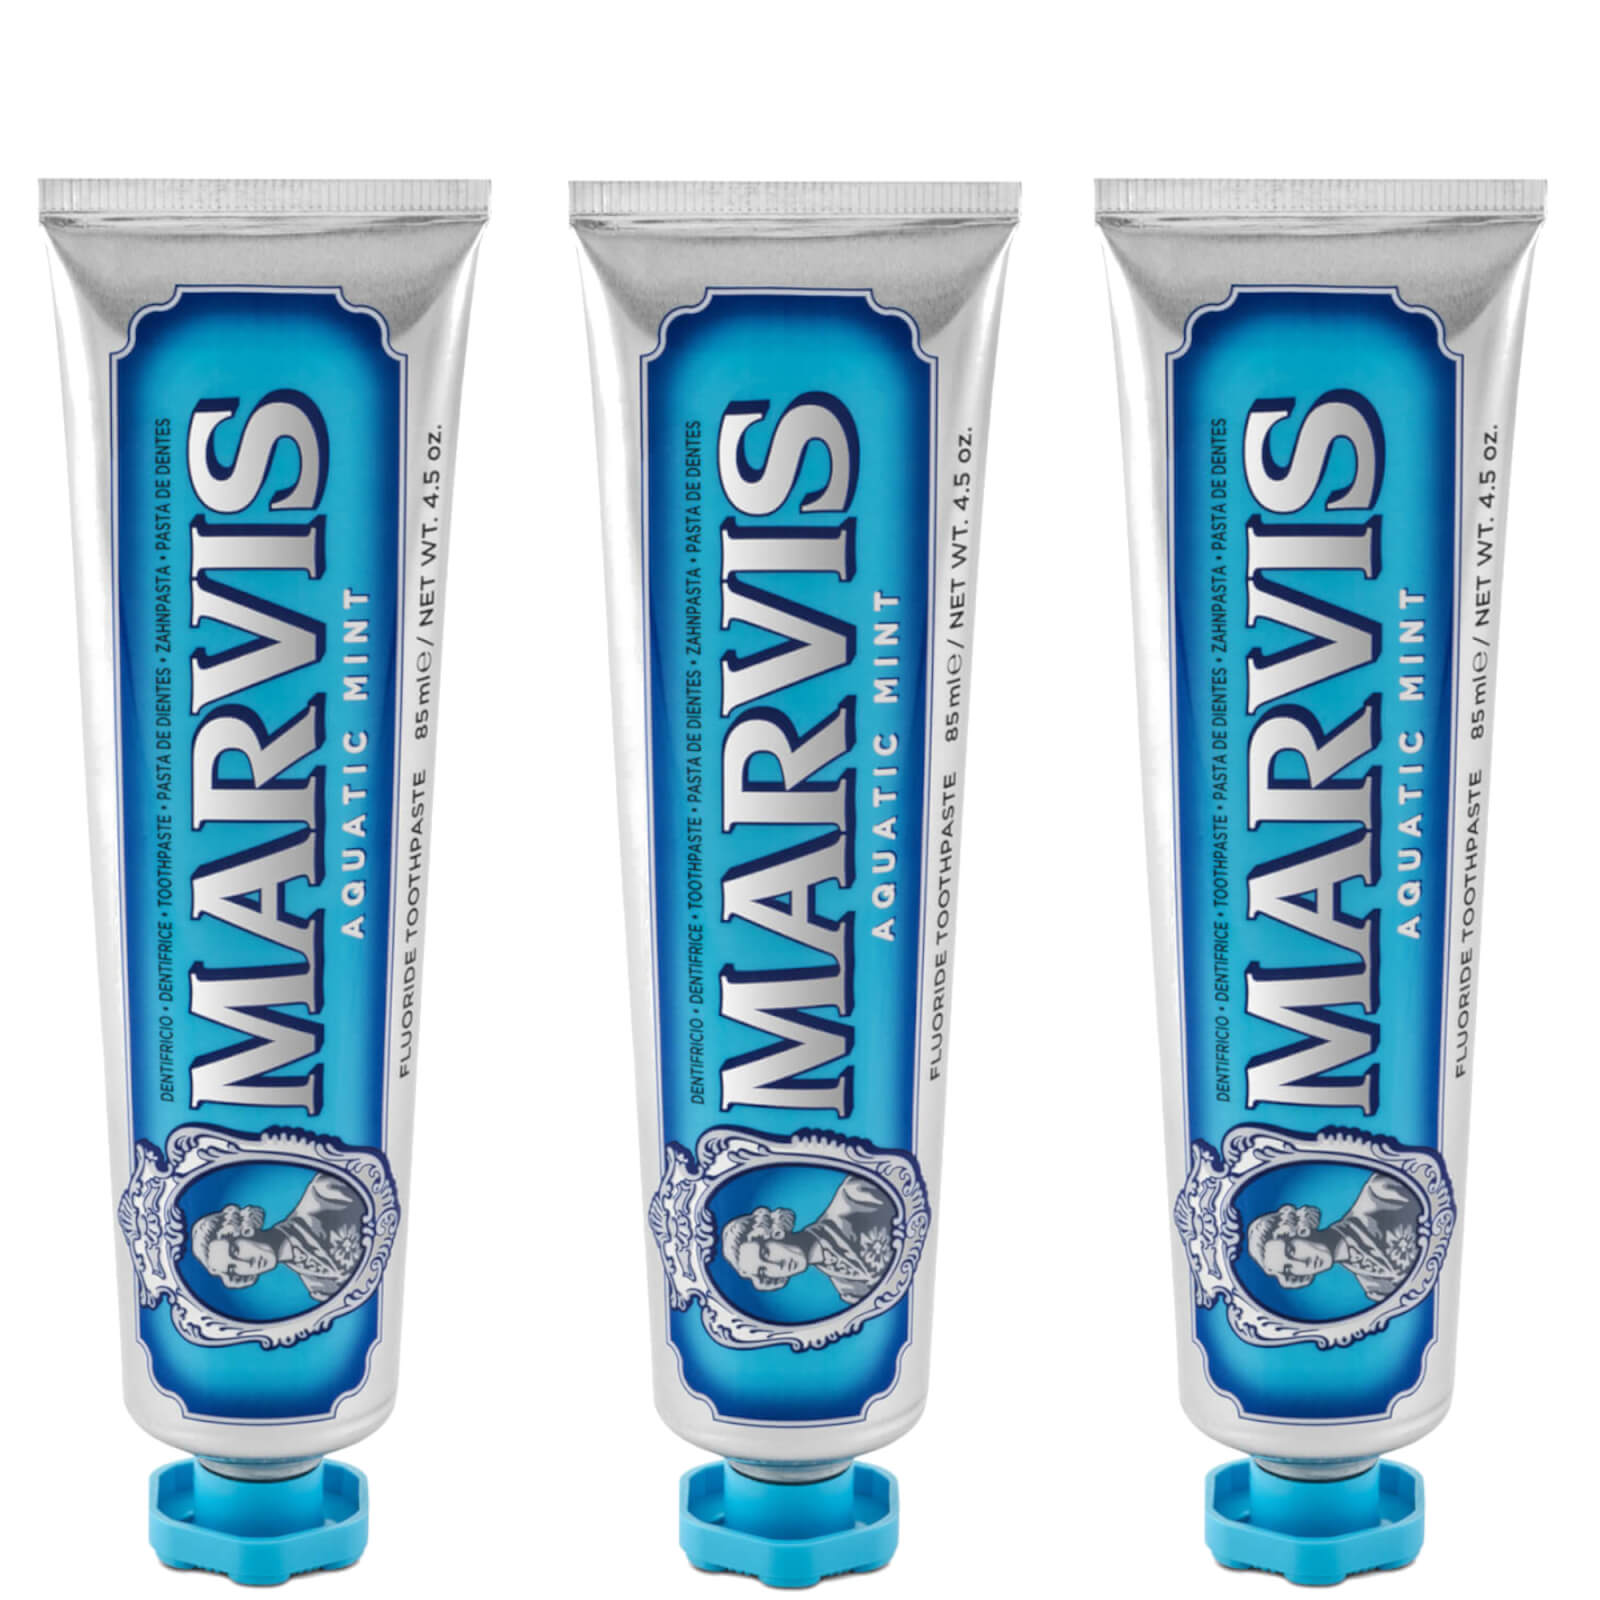 Marvis Aquatic Mint Toothpaste Bundle (3x85ml)